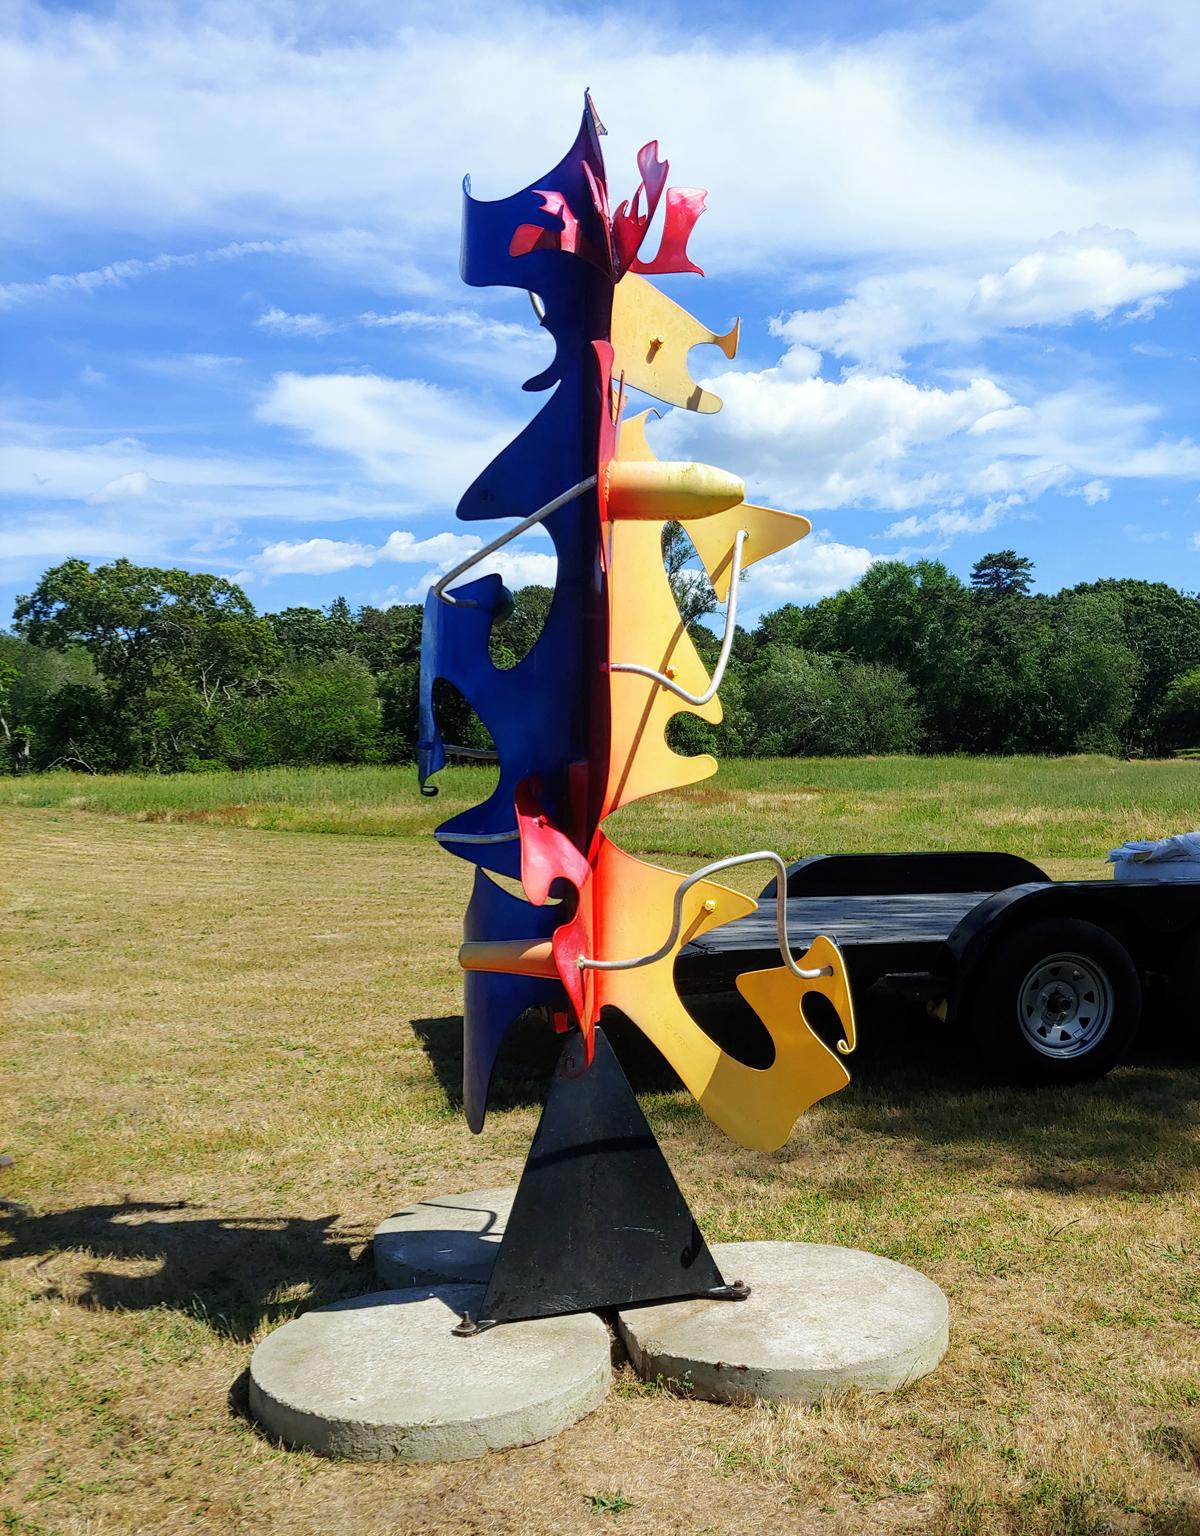 Steven Zaluski Abstract Sculpture - "Rainbow Totem", Kinetic, Abstract Outdoor Metal Sculpture in Painted Aluminum